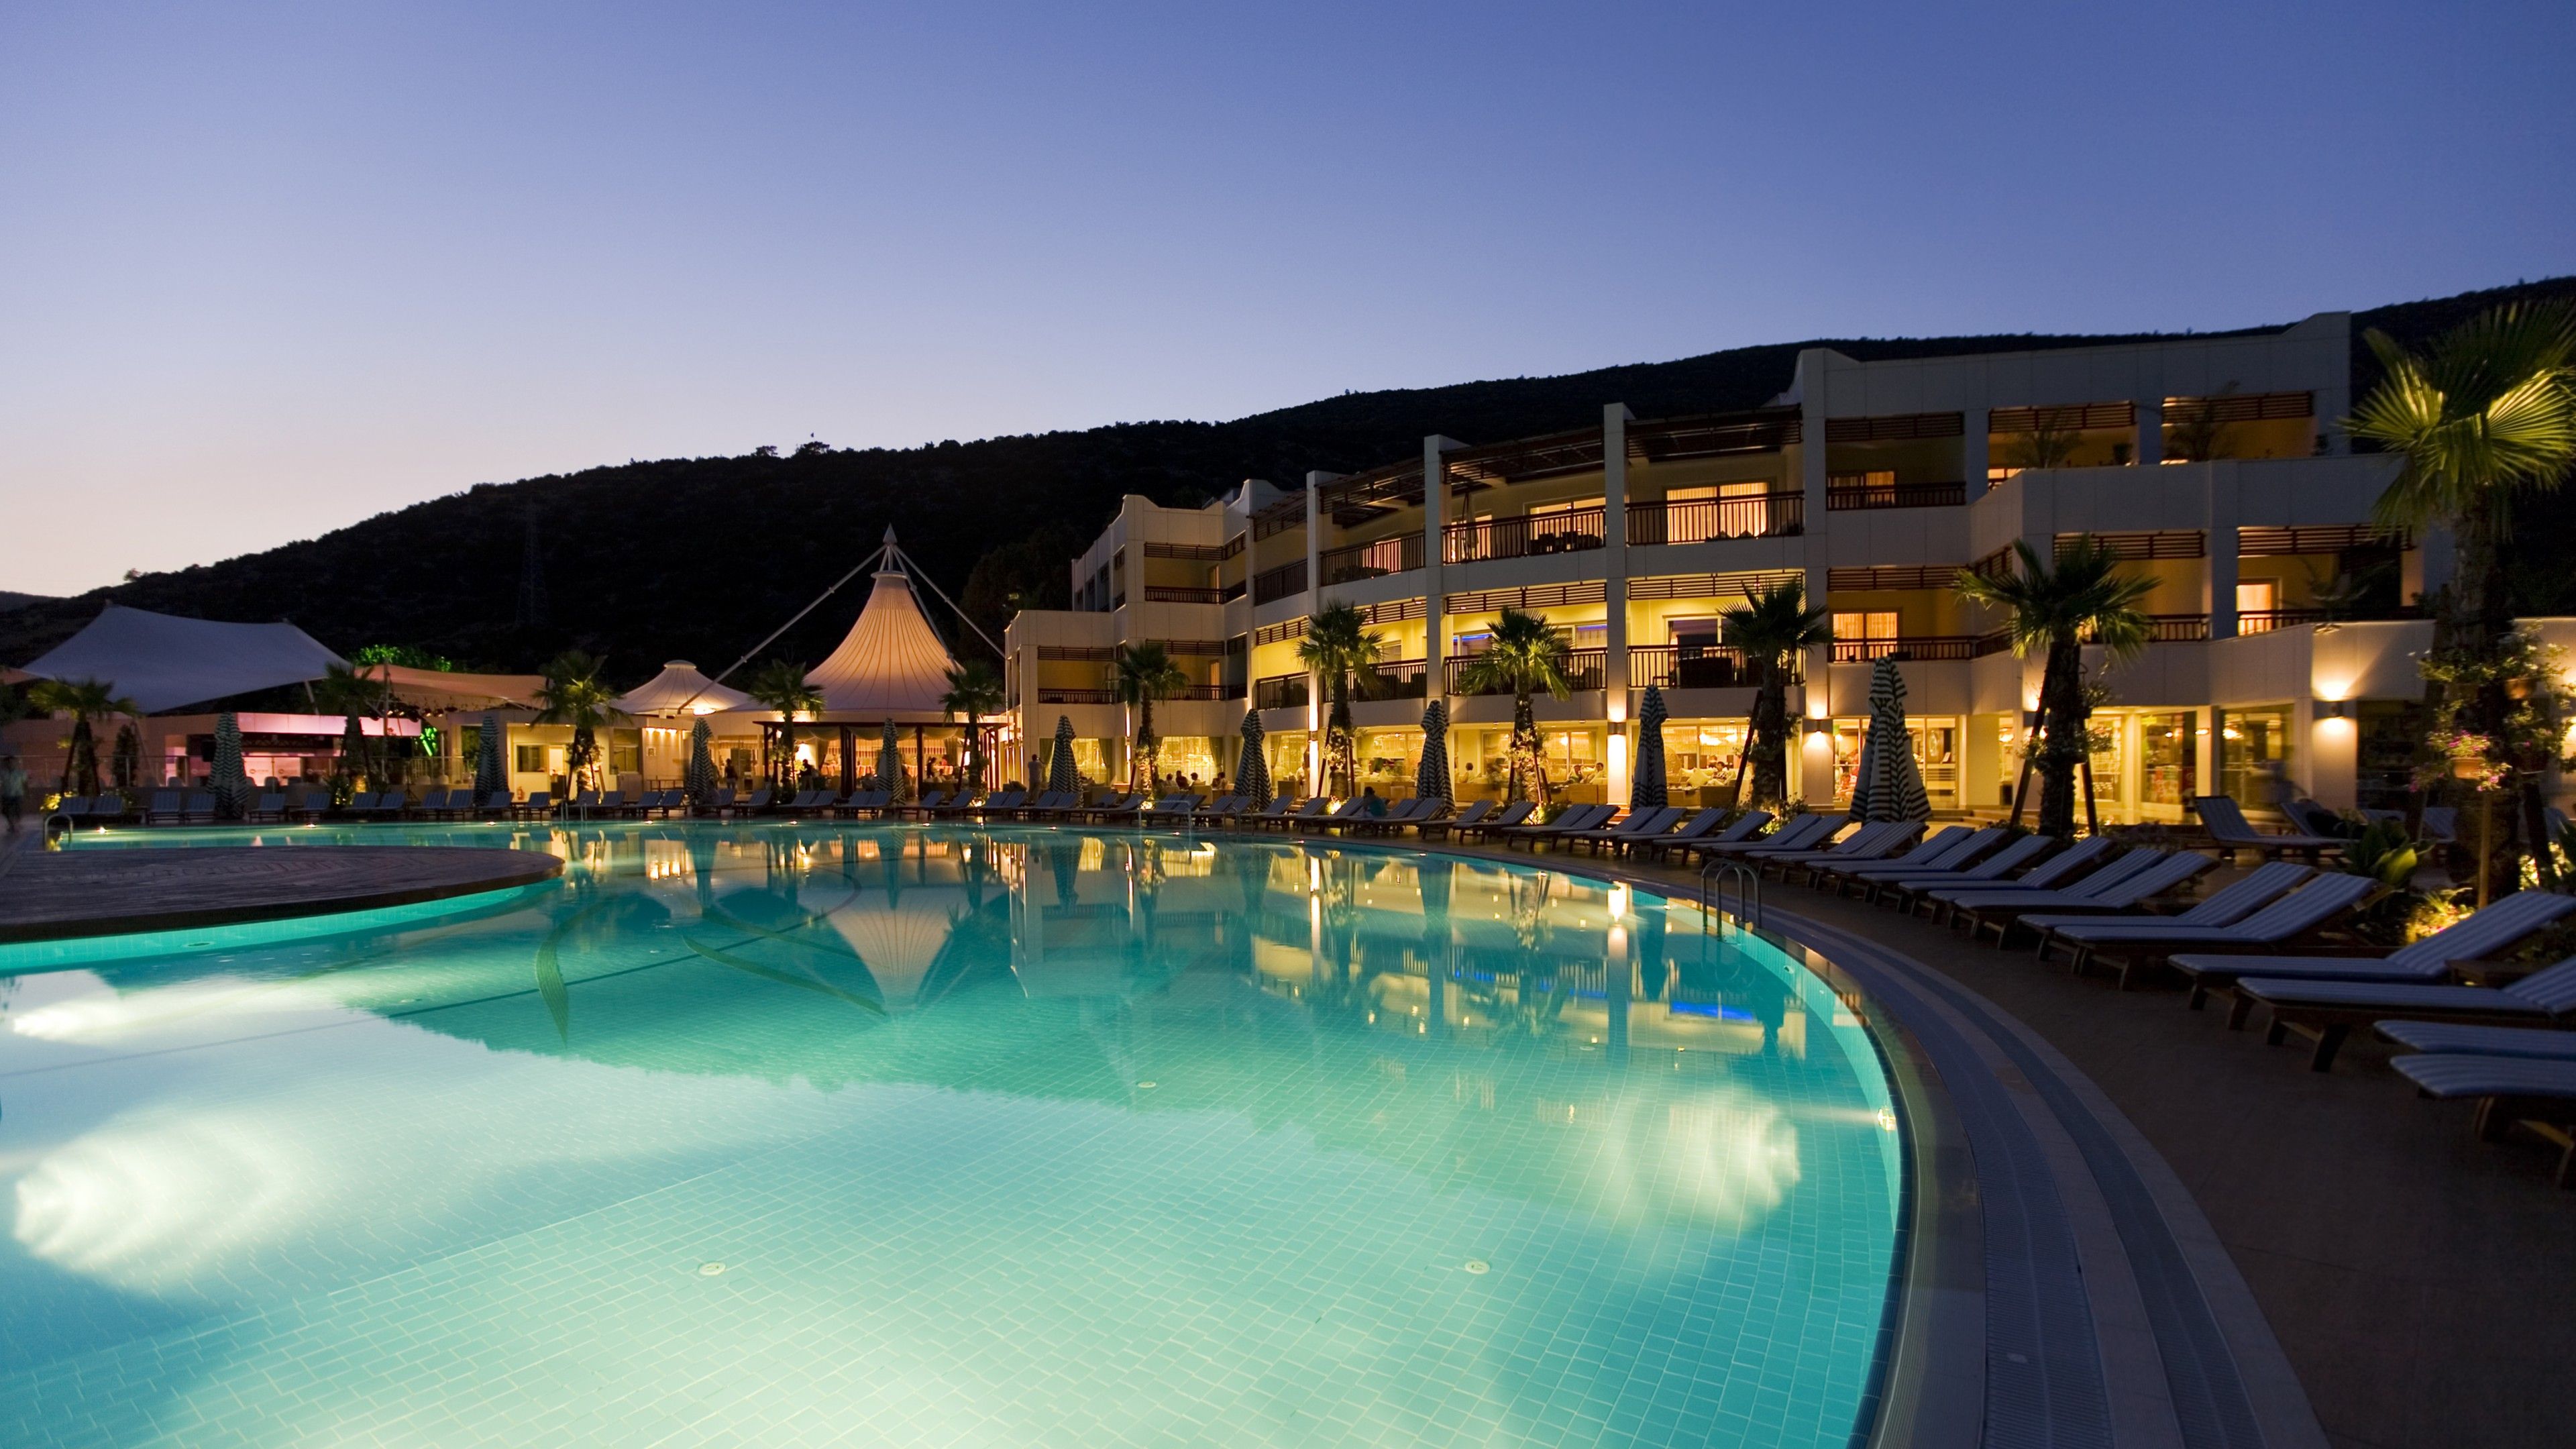 Latanya Bodrum Beach Resort, Turkey, hotel, pool, twilight, light